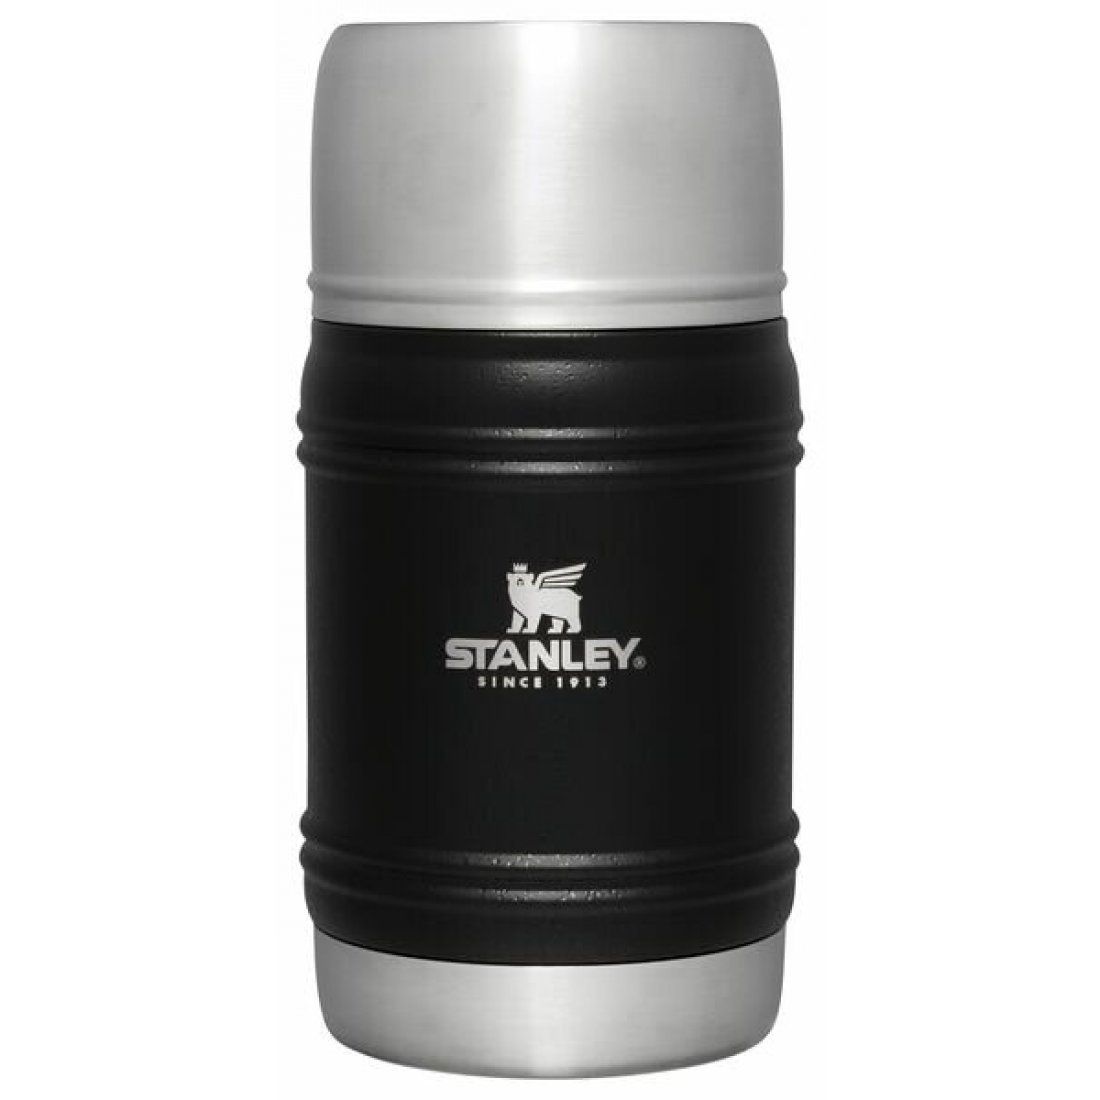 Stanley-The-Artisan-Thermal-Food-Jar-0-5L-Black-Moon-1100x1100h